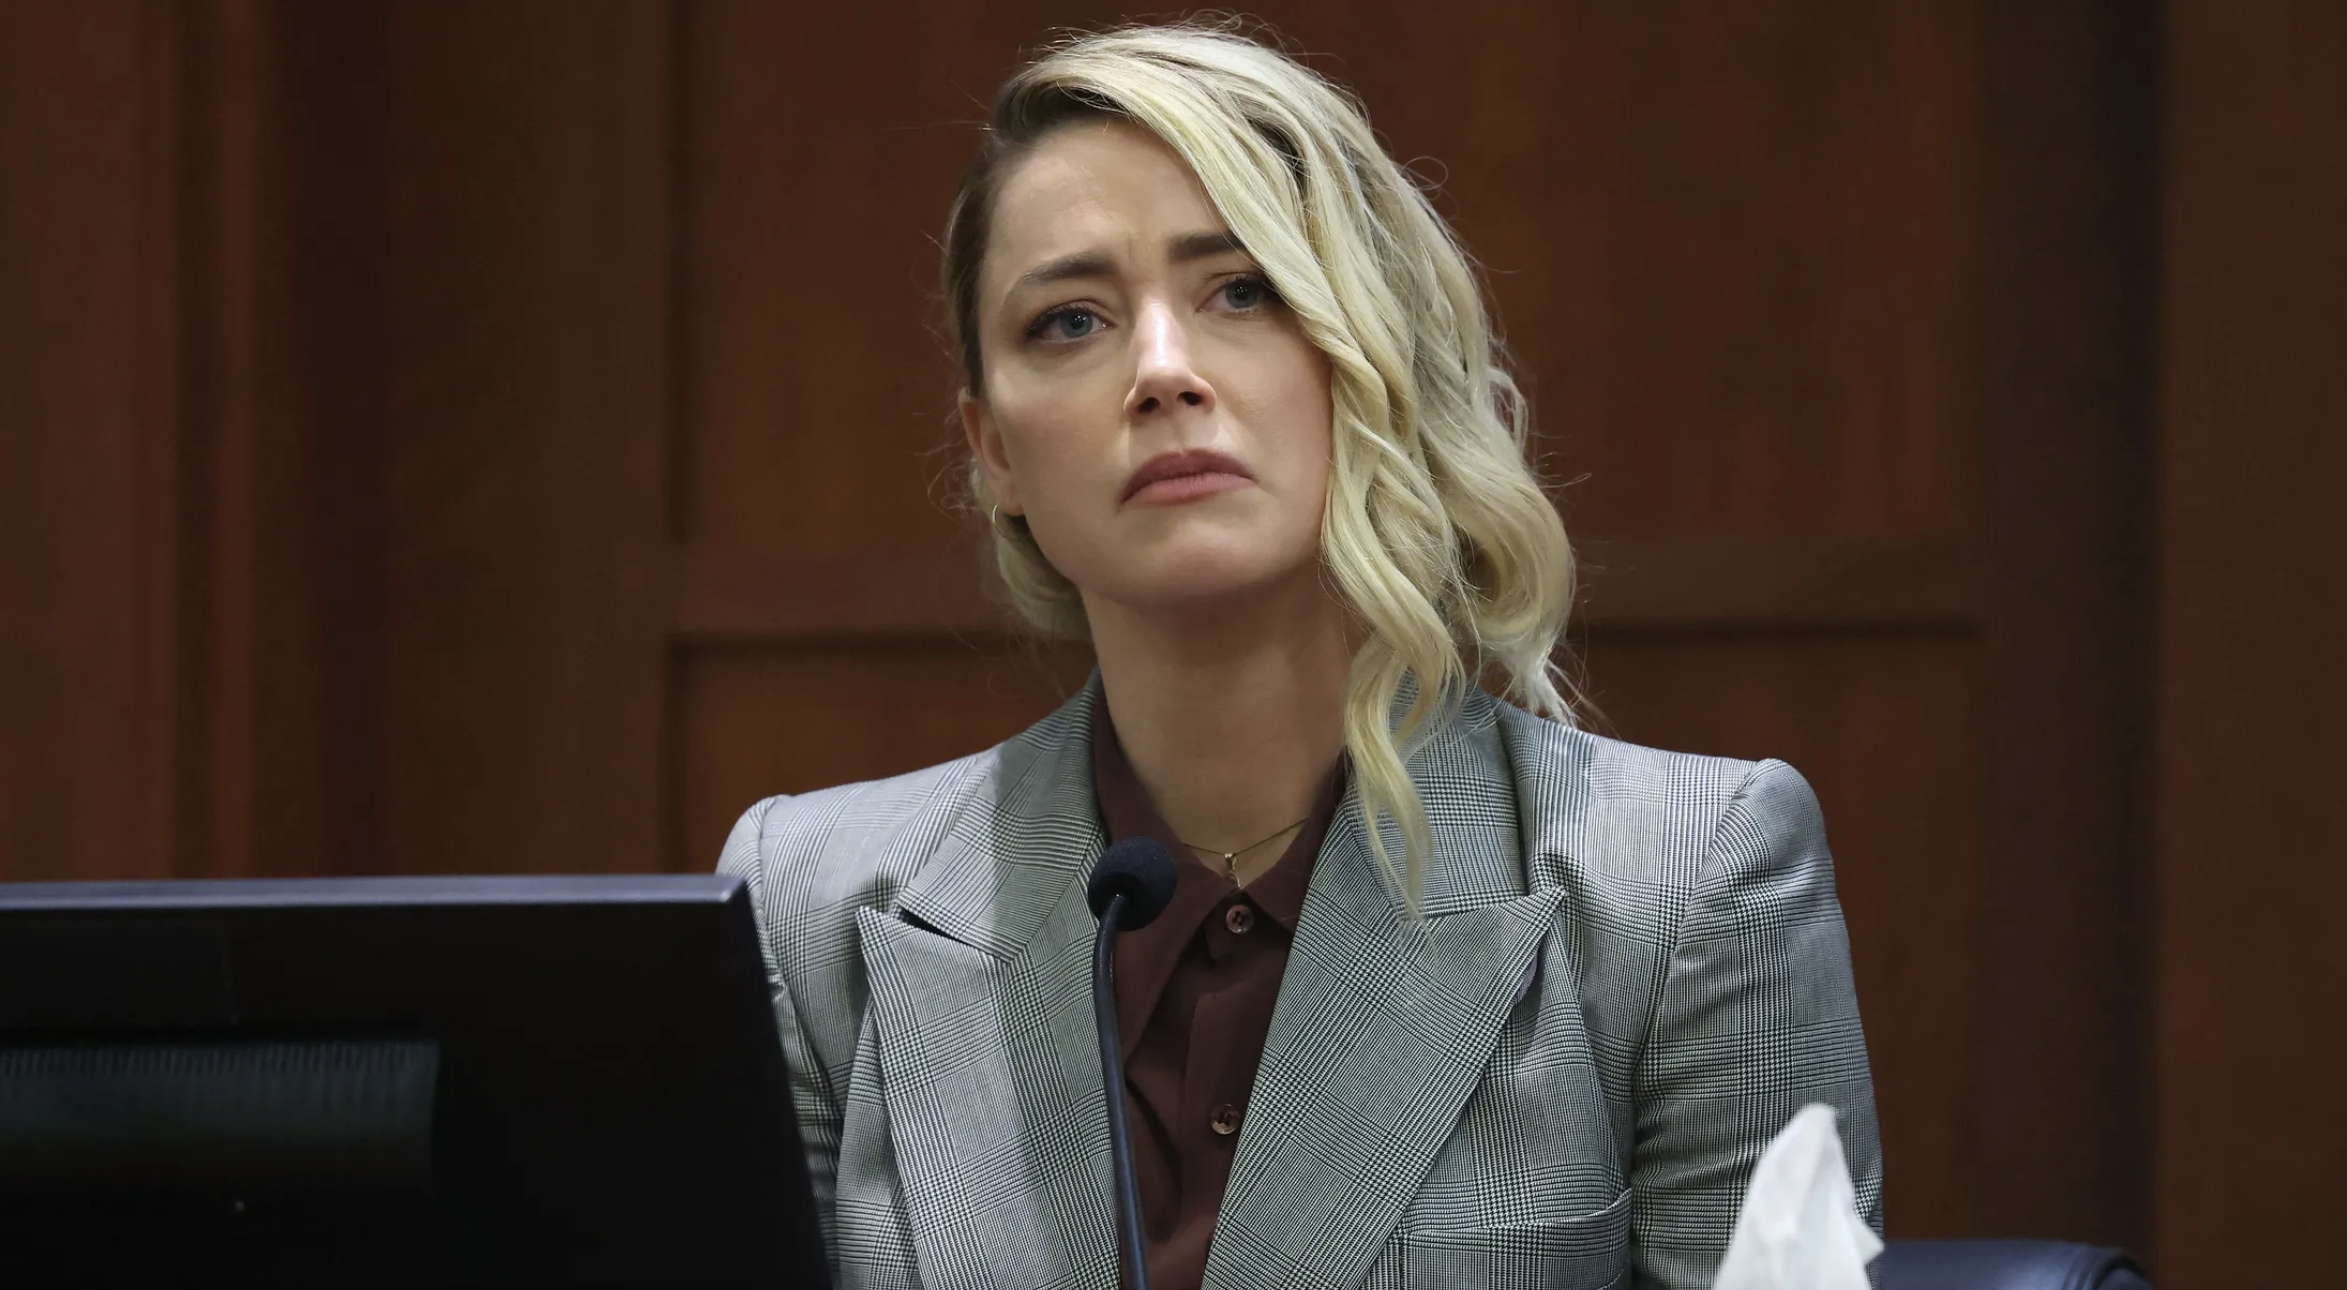 Amber Heard faces high legal hurdles seeking to reverse Depp win